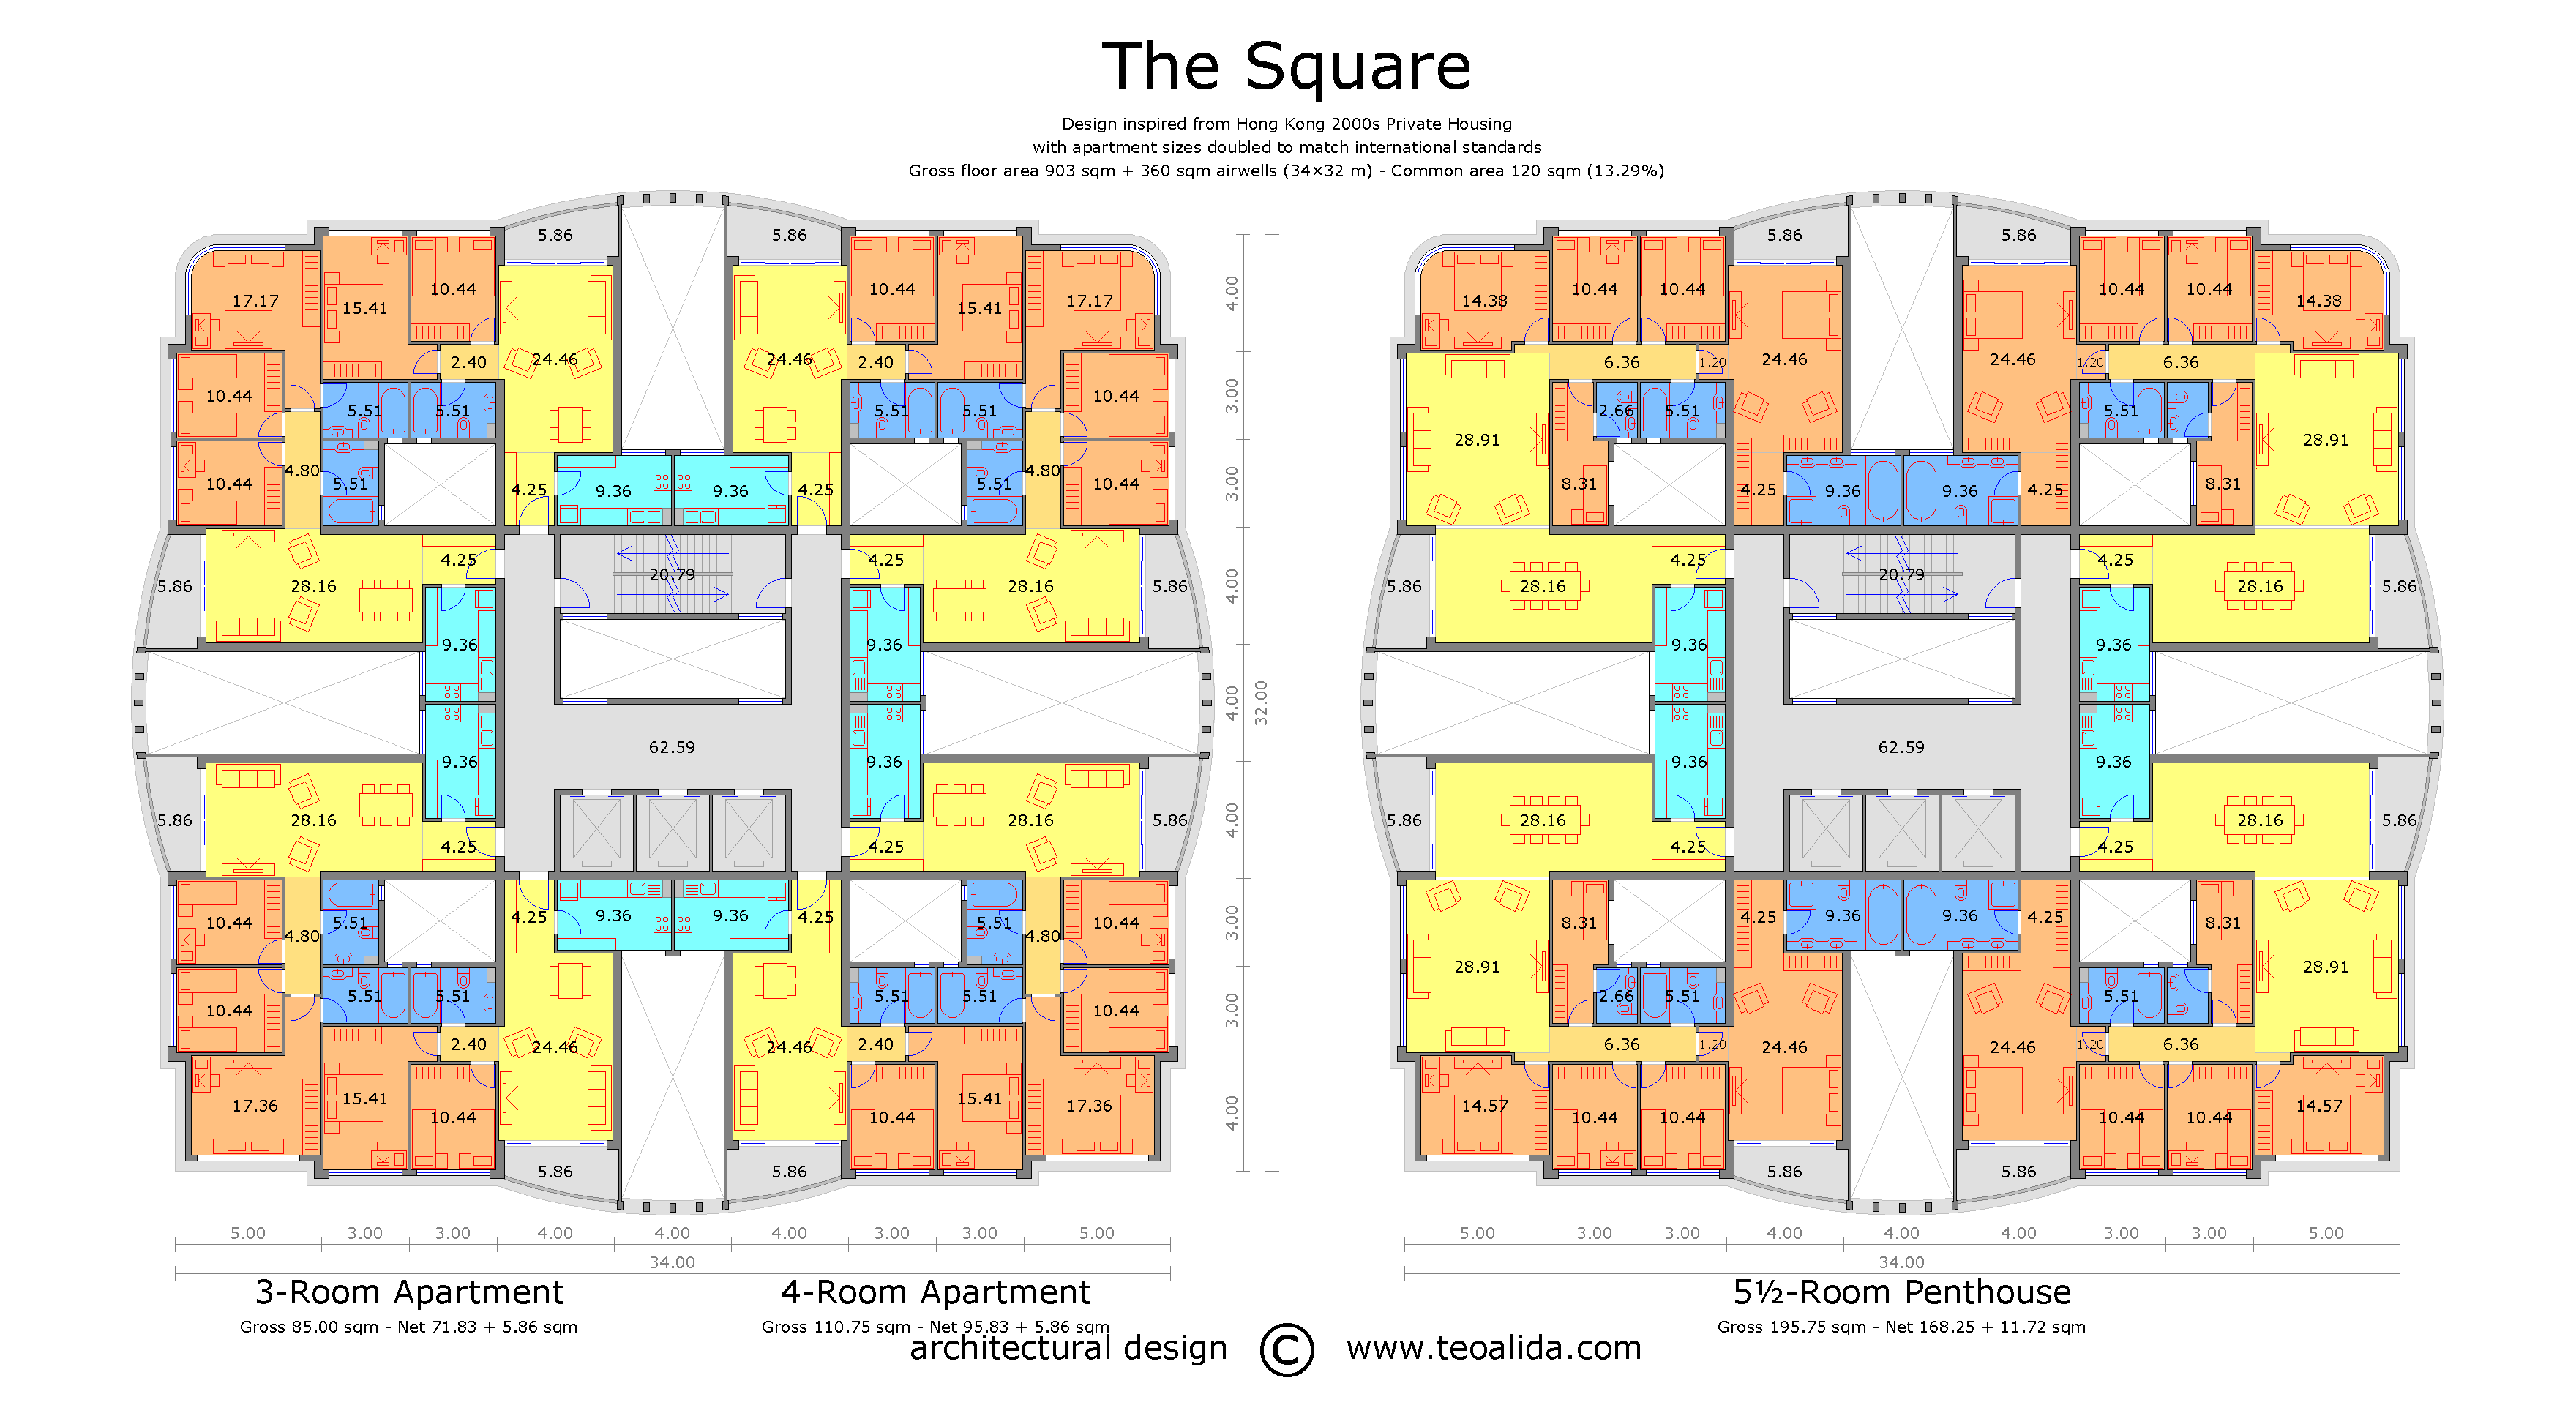 The Square floor plan